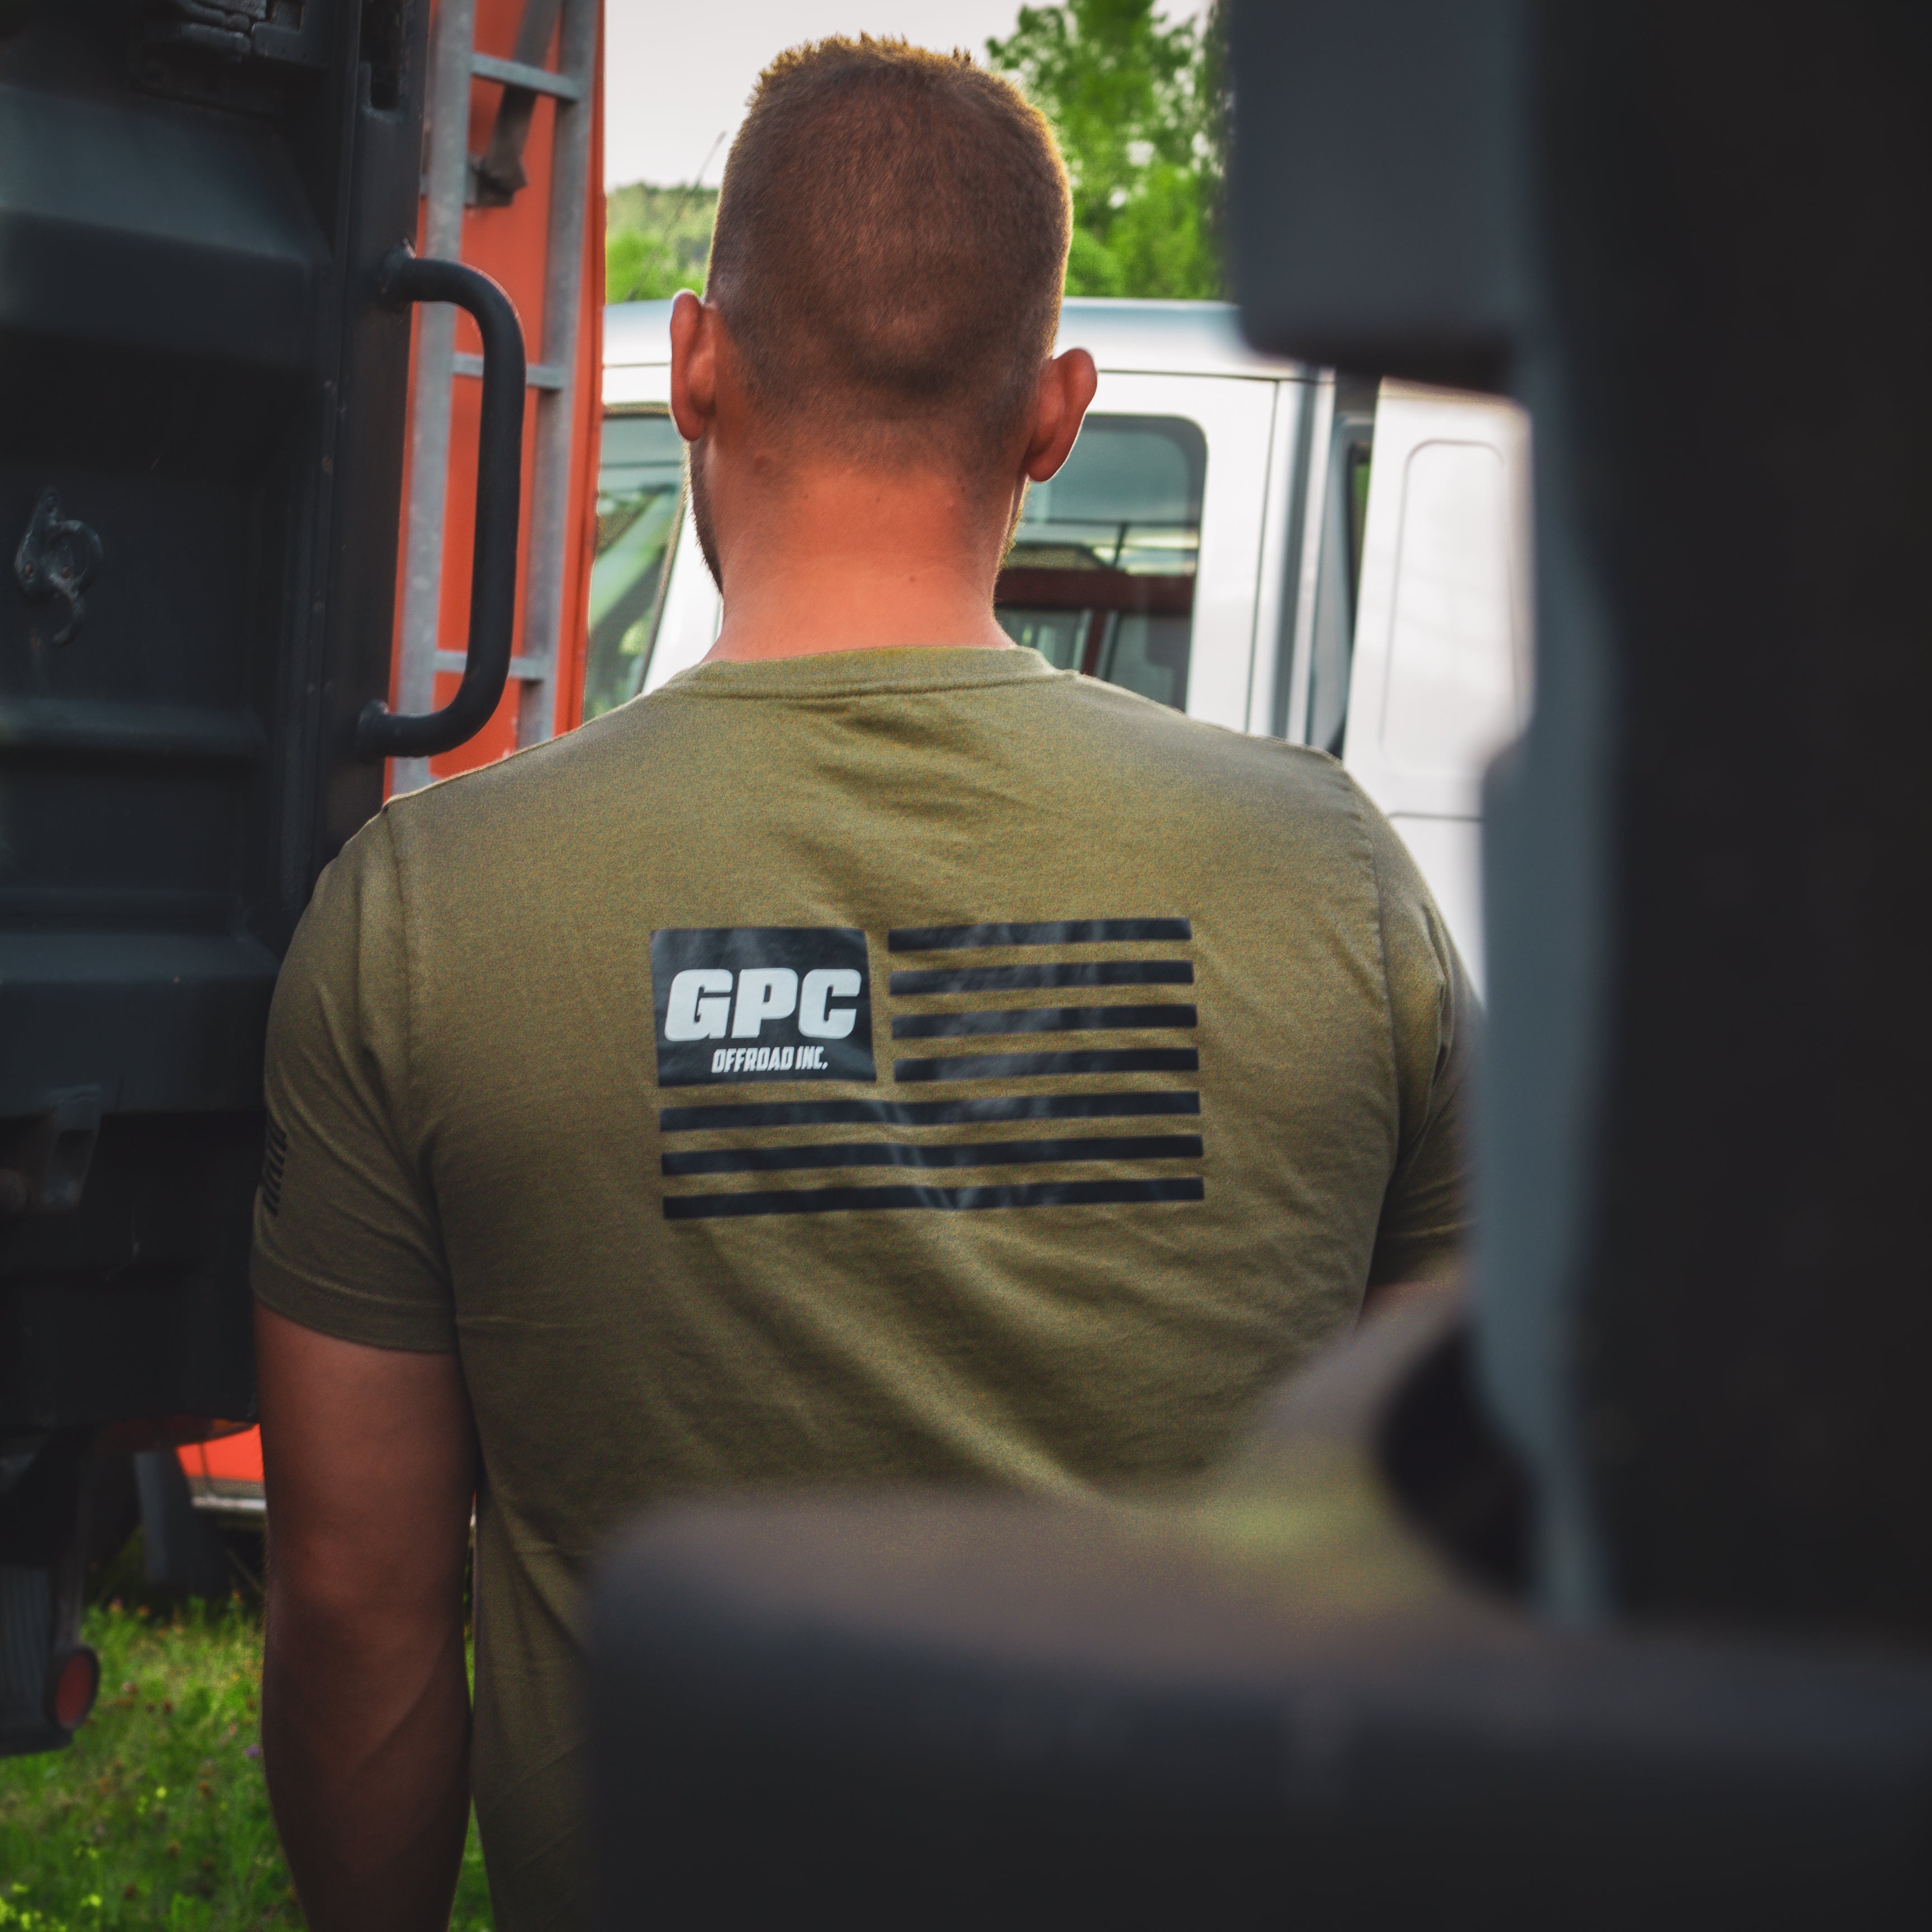 GPC Offroad Inc. T-Shirt